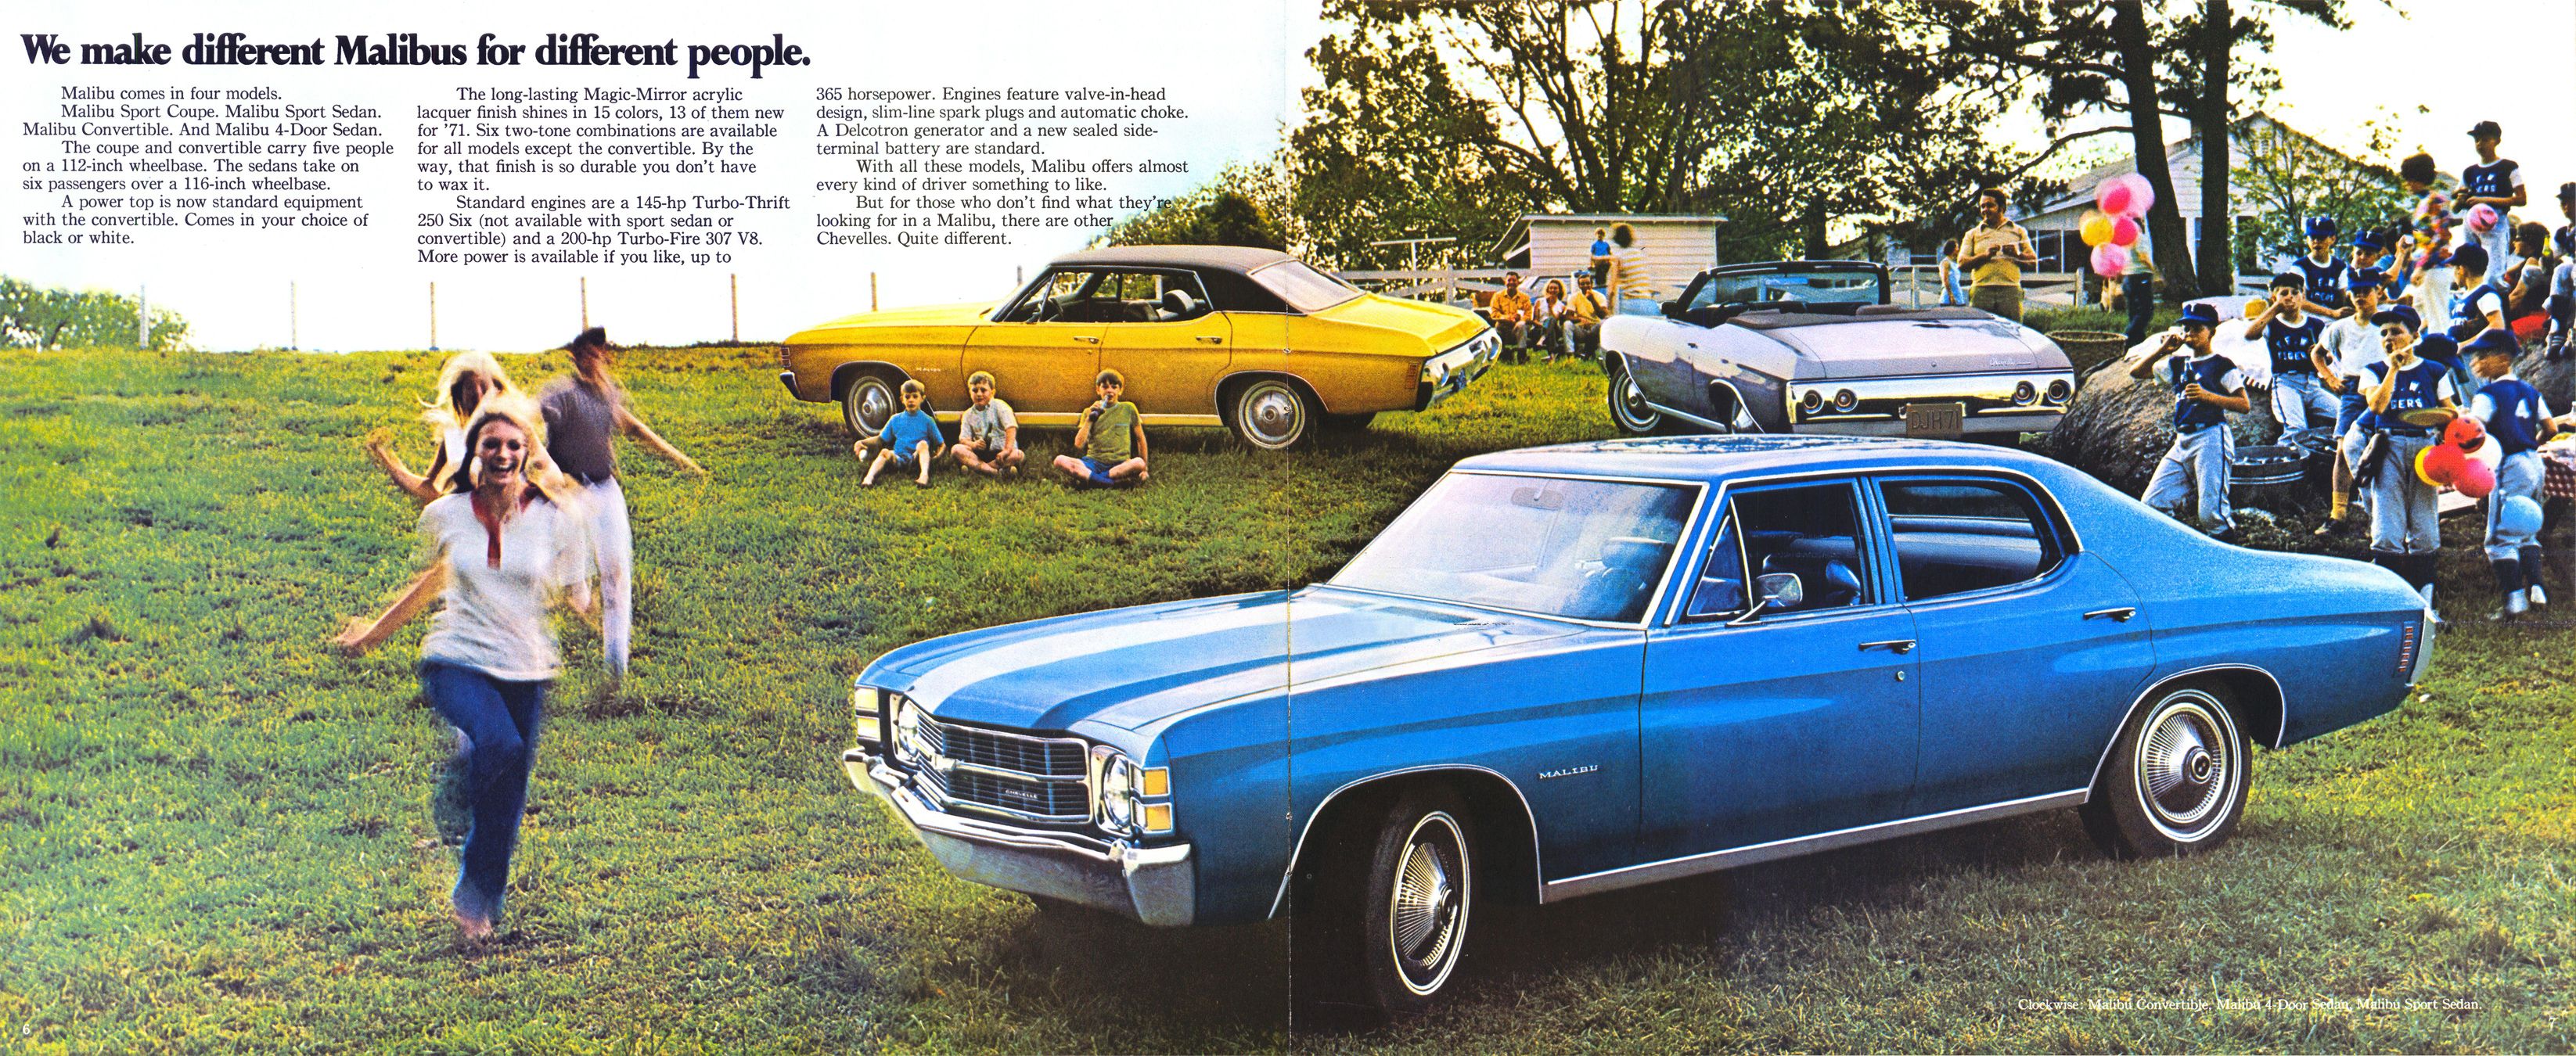 1971_Chevrolet_Chevelle_R1-06-07